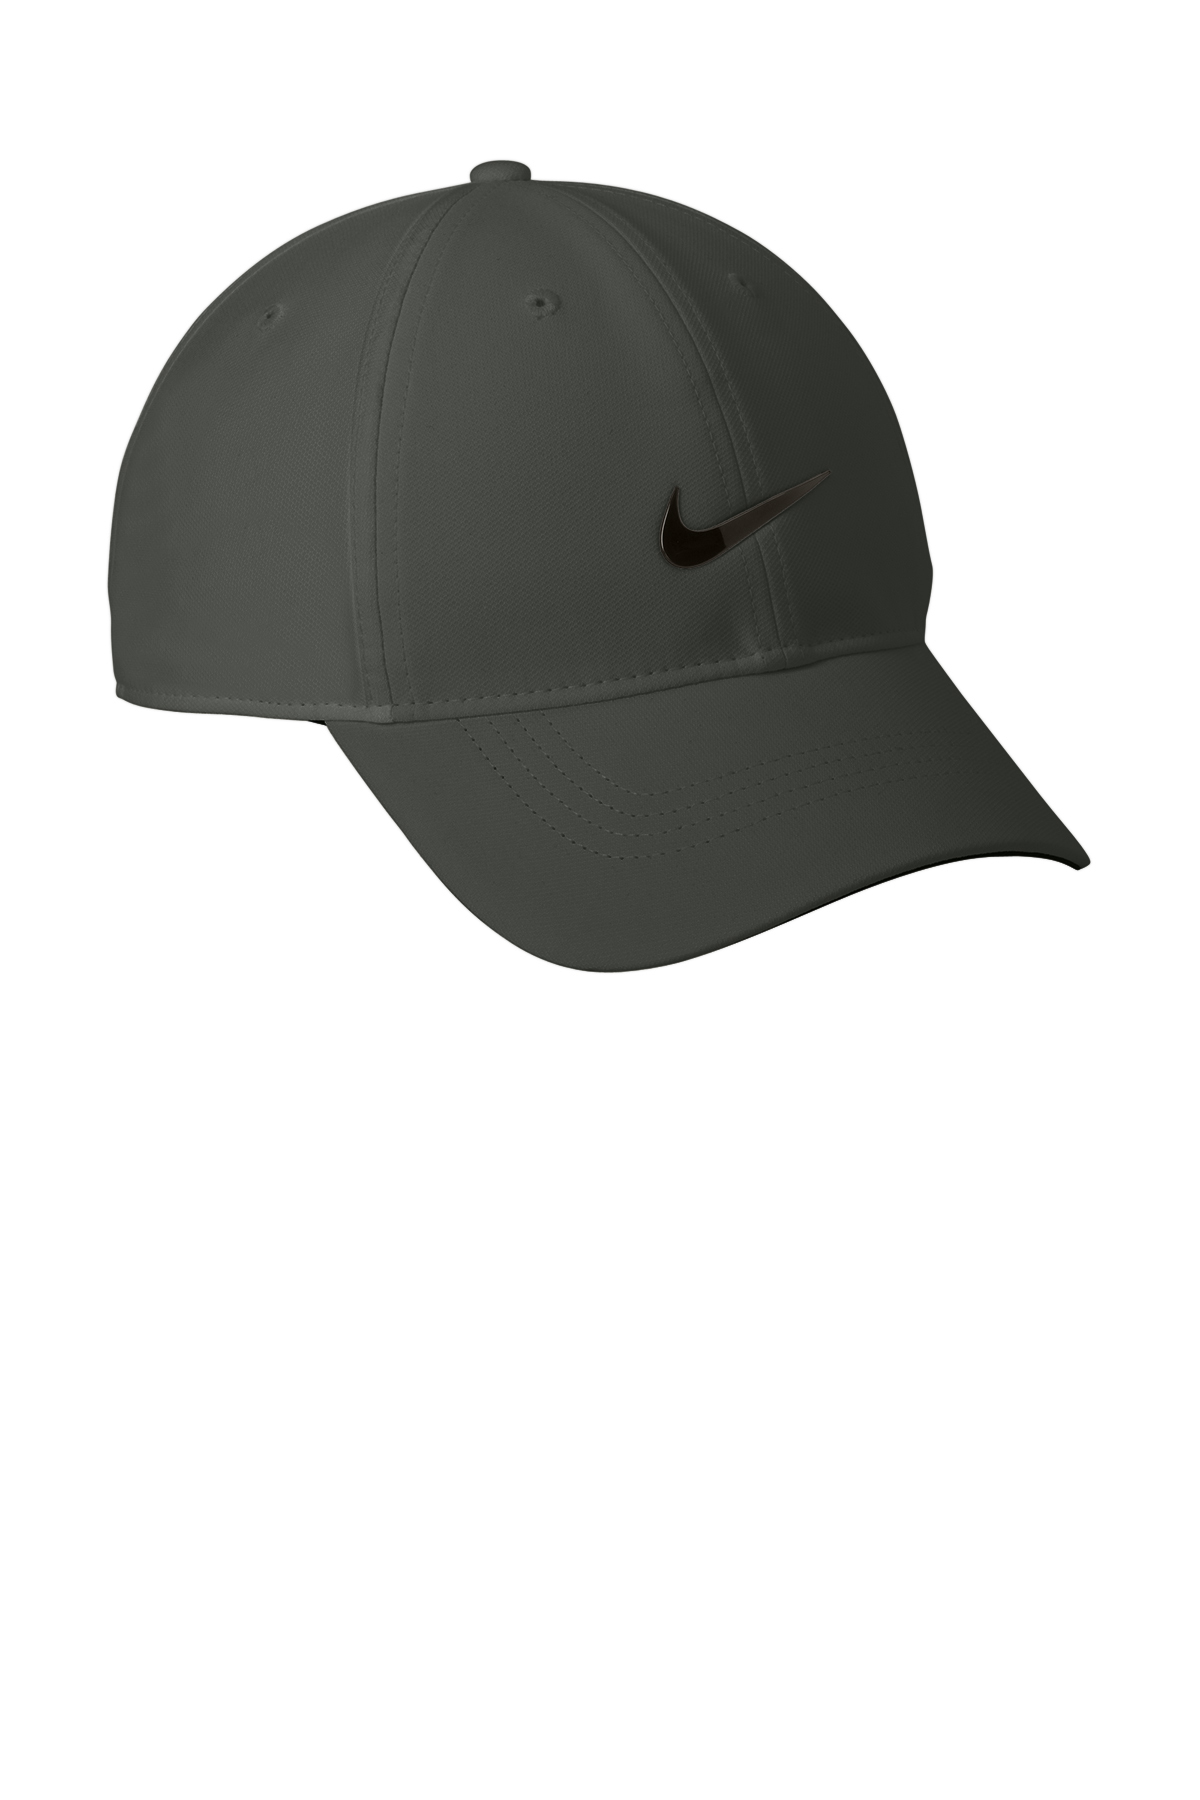 Nike Dri-FIT Swoosh Performance Cap | Product | SanMar